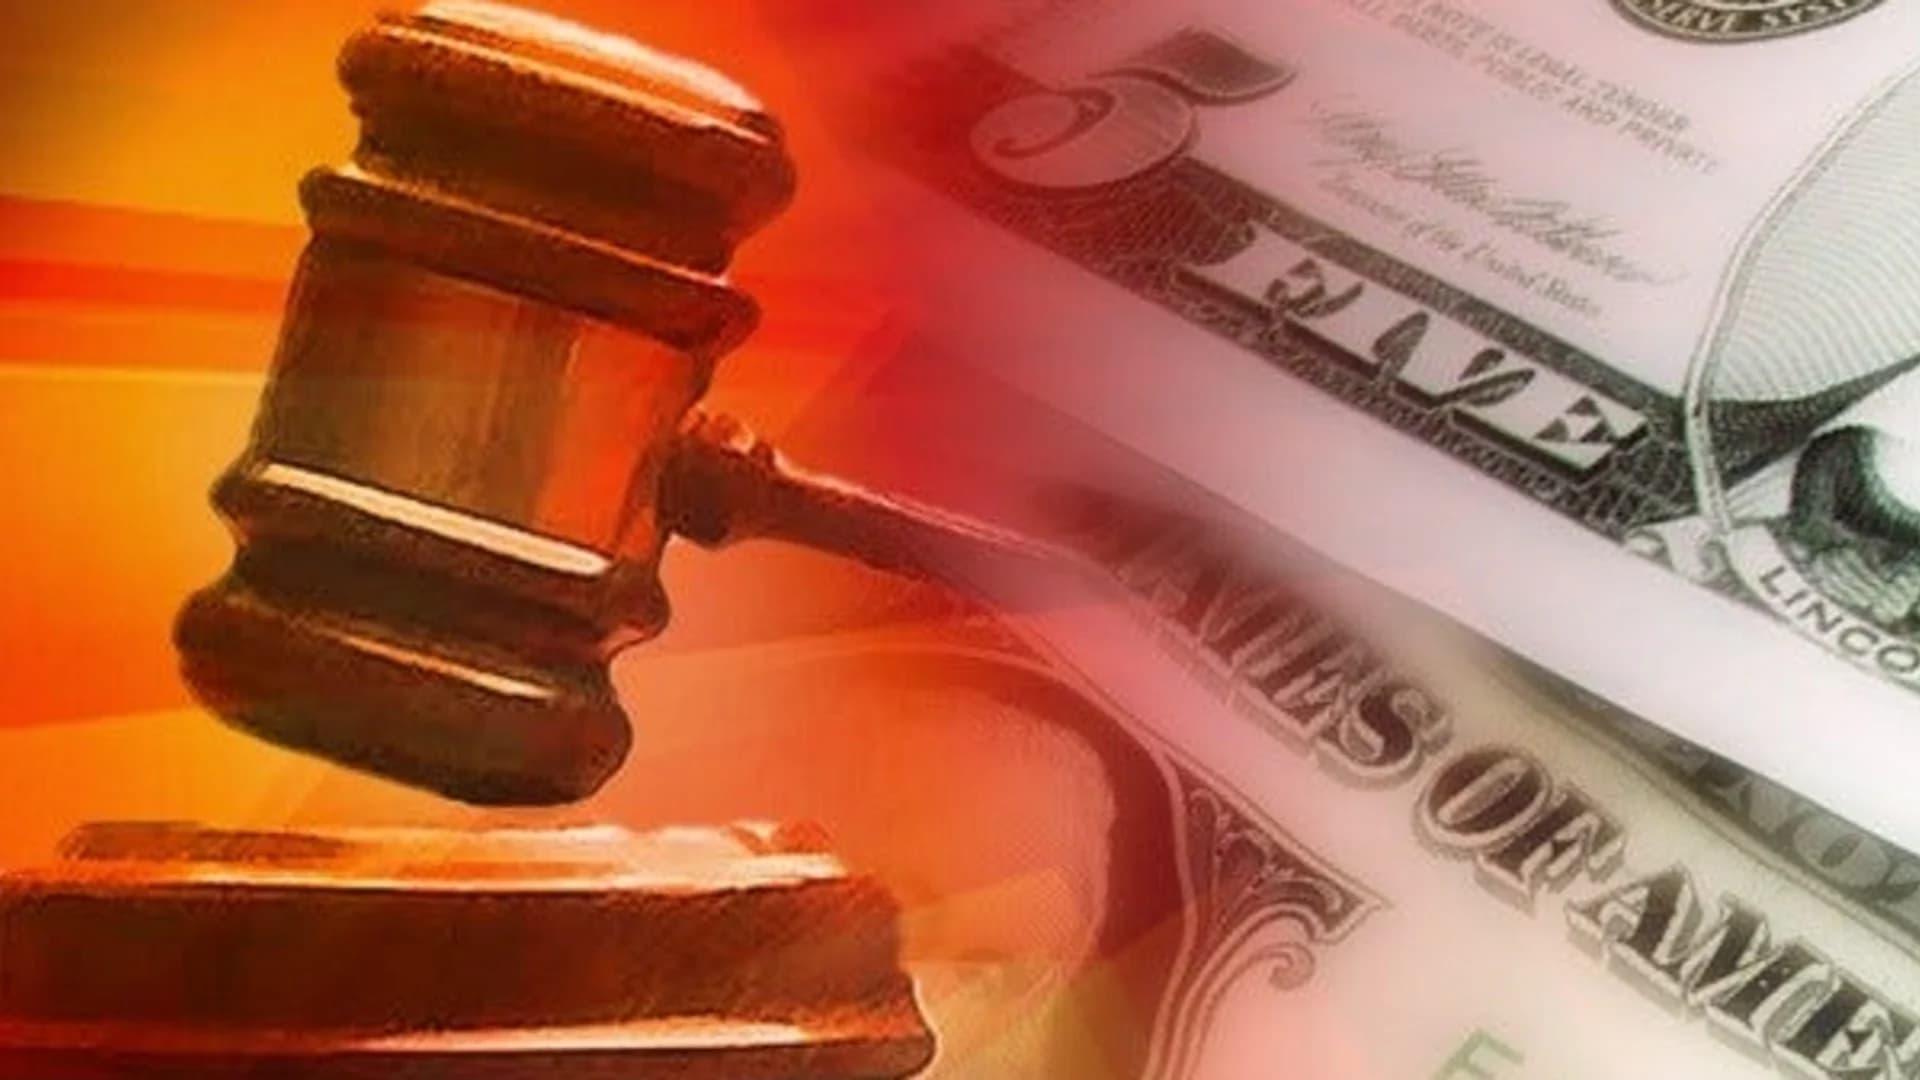 Two men convicted involving $25 million scheme that defrauded banks